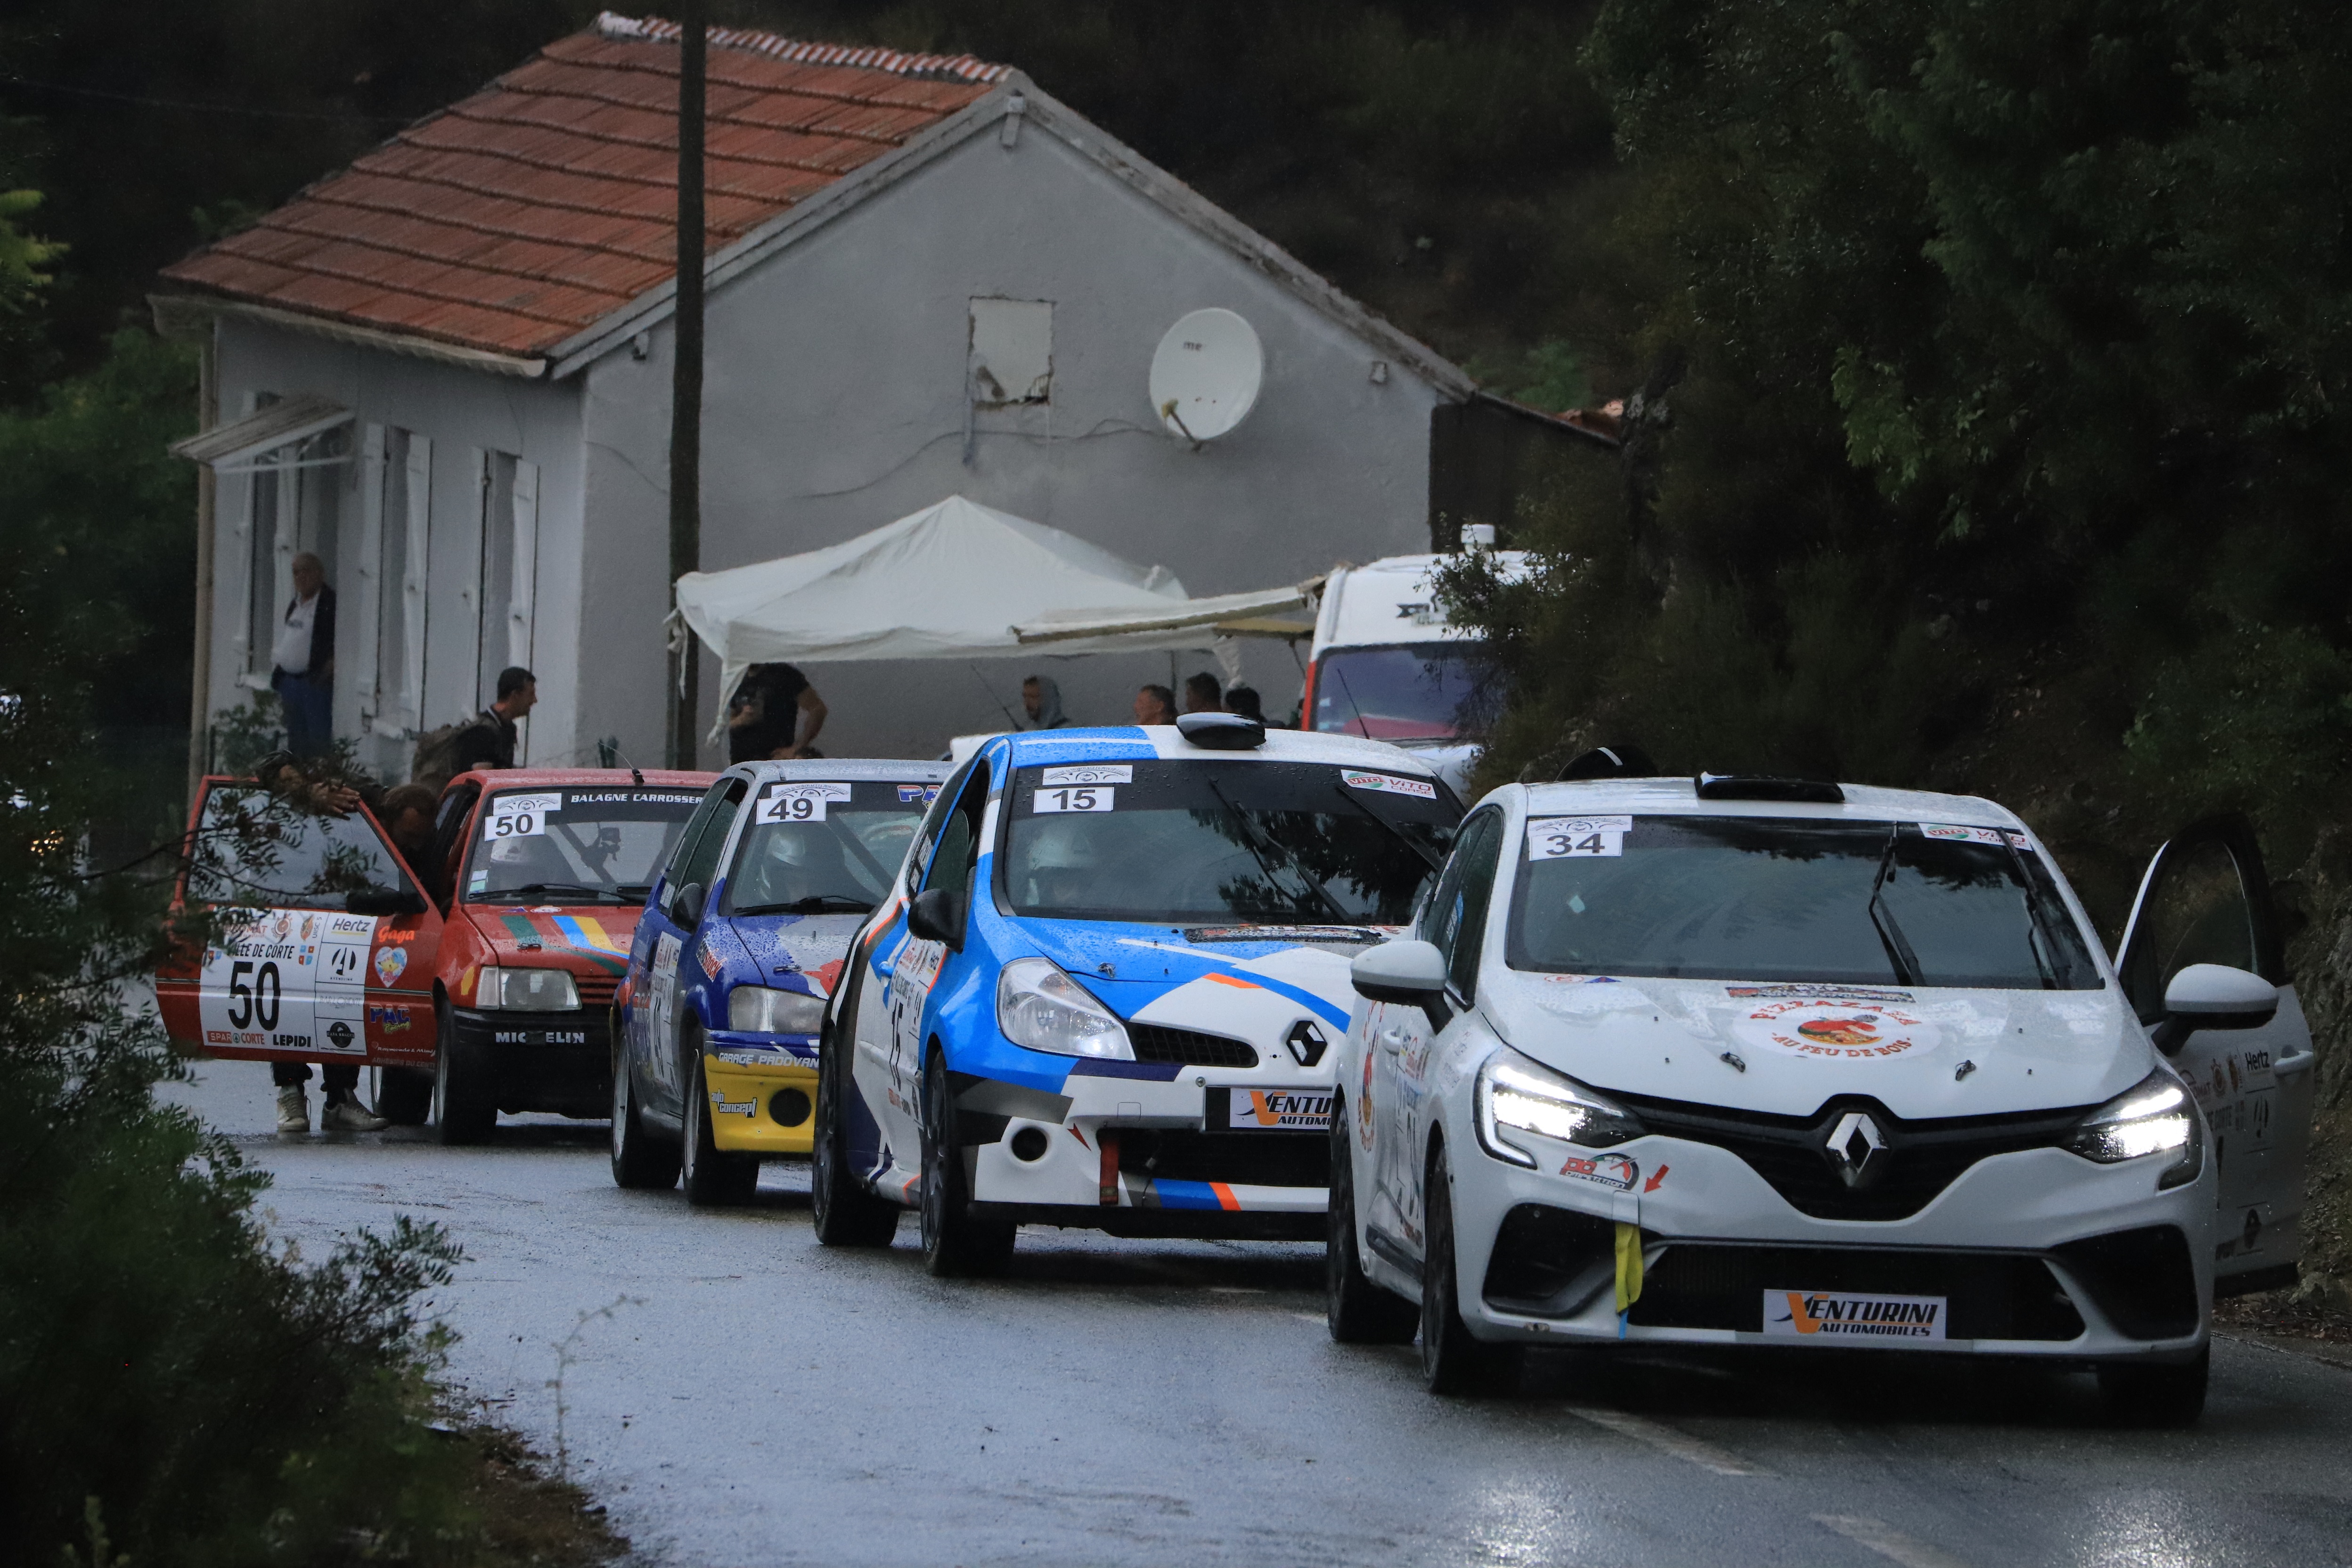 Rallye Corte-Centre Corse : Tous derrière Casanova et Mariani